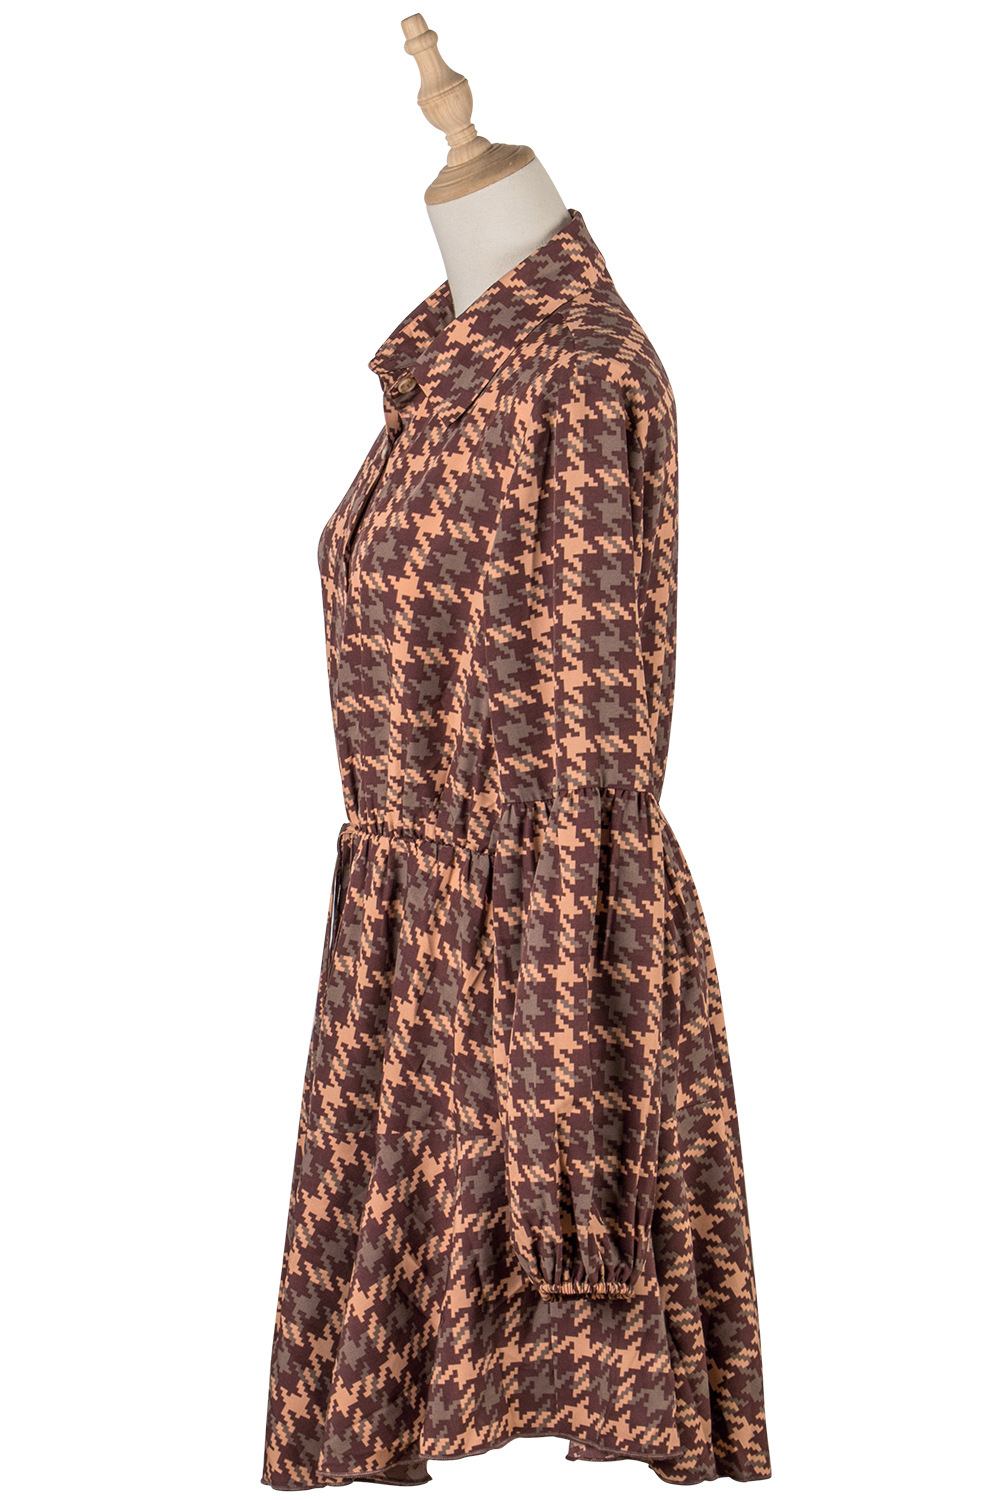 Plaid long sleeve European style autumn dress